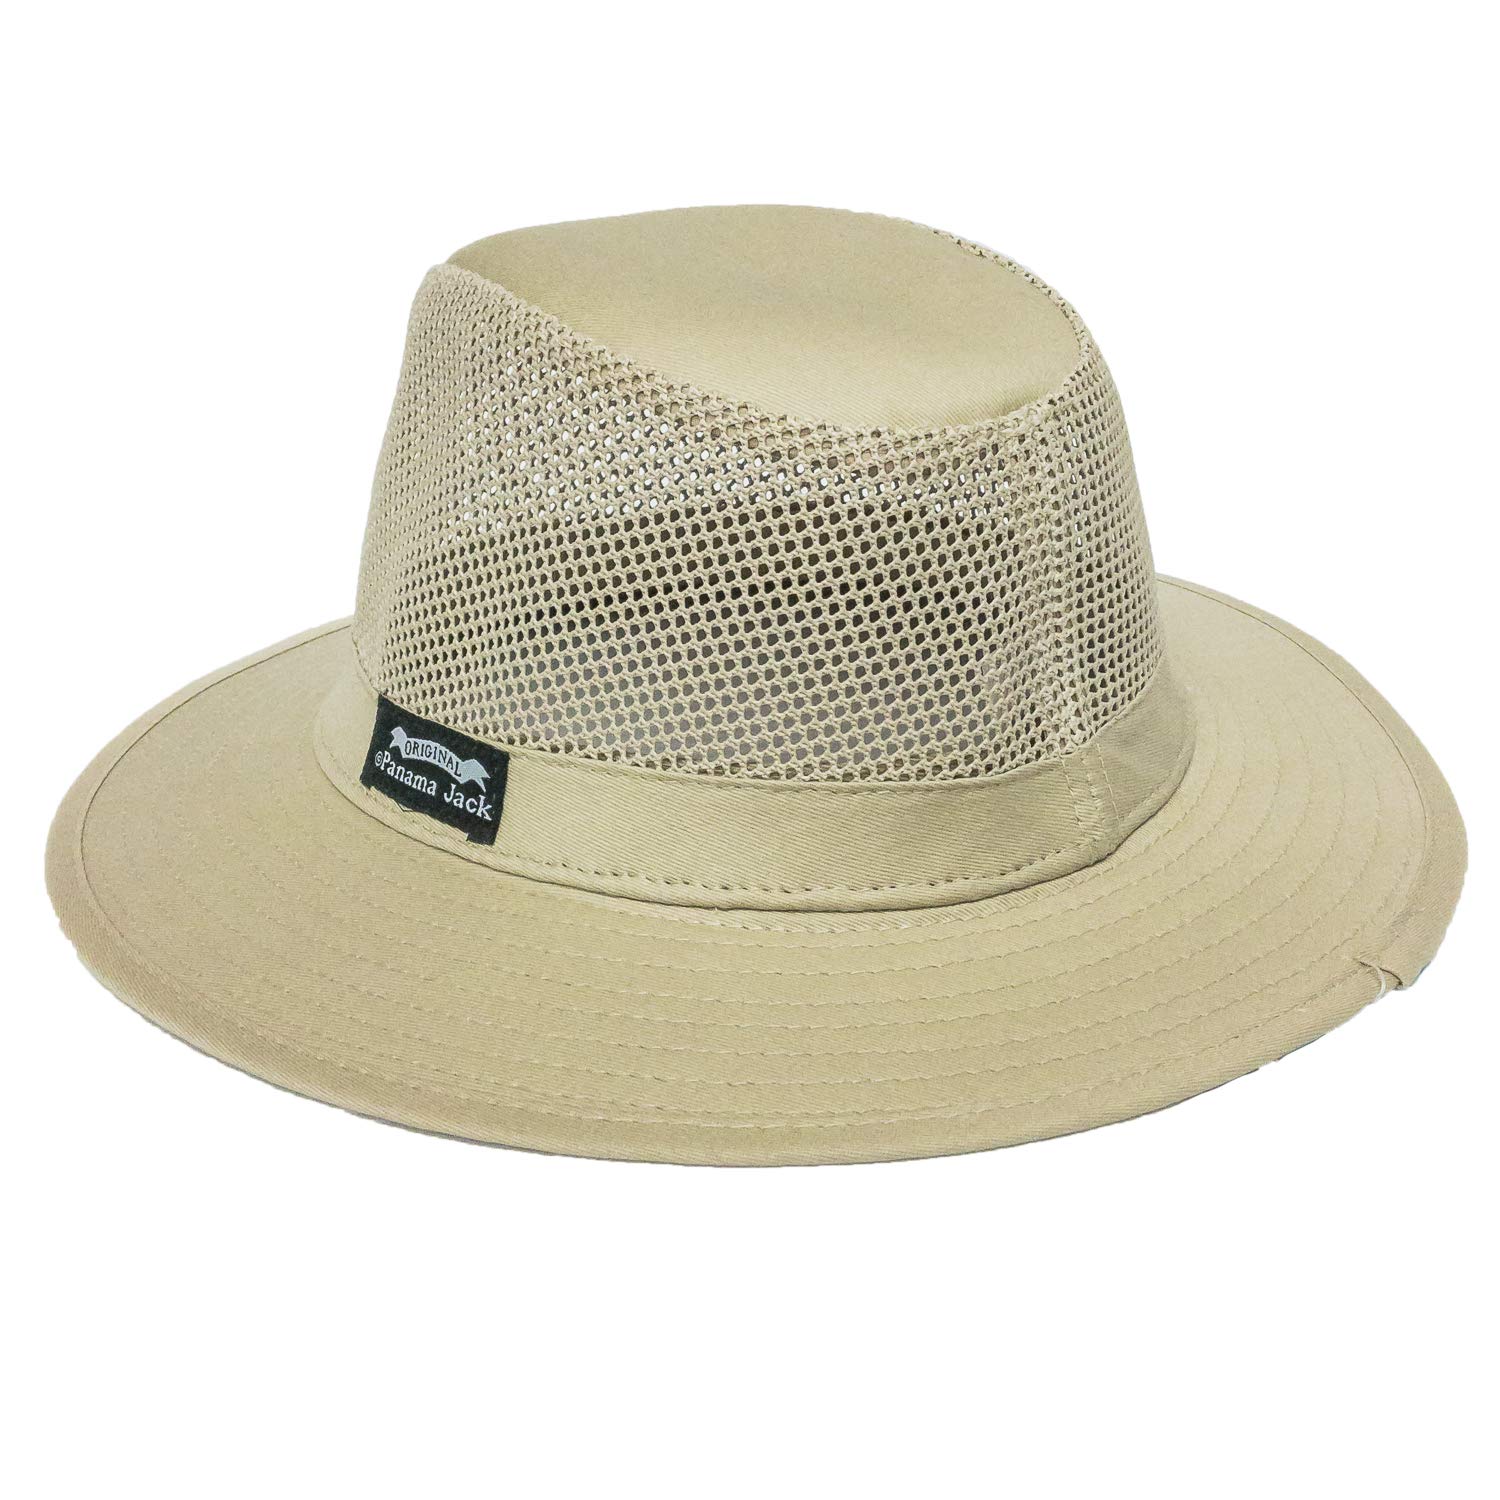 Panama Jack Original Mesh Safari Hat 2 12 Brim Upf Spf 50 Sun